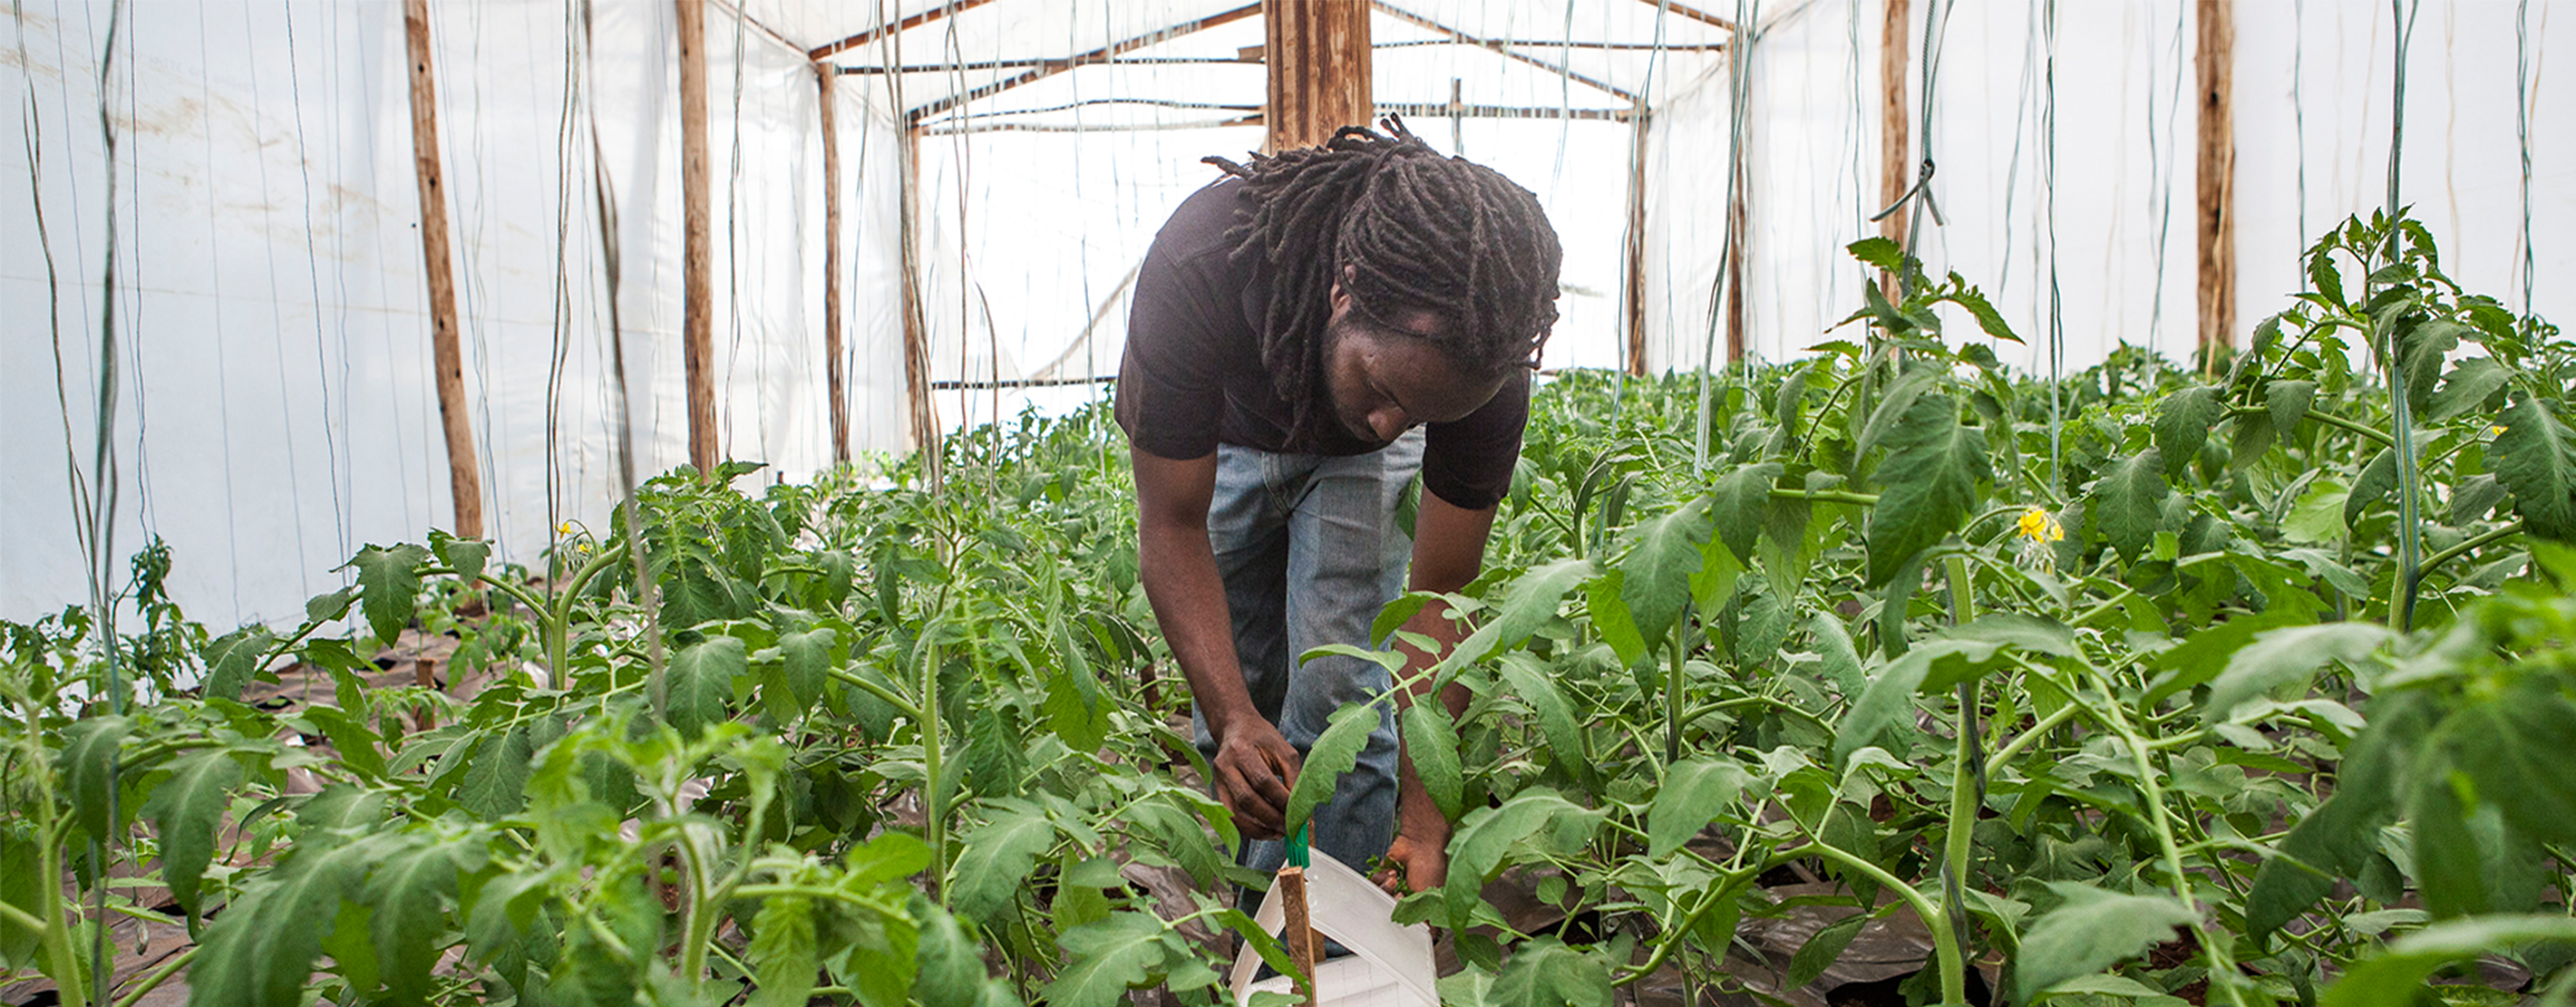 Victor Kipkorir Tending To Tomato Plants In Kenya